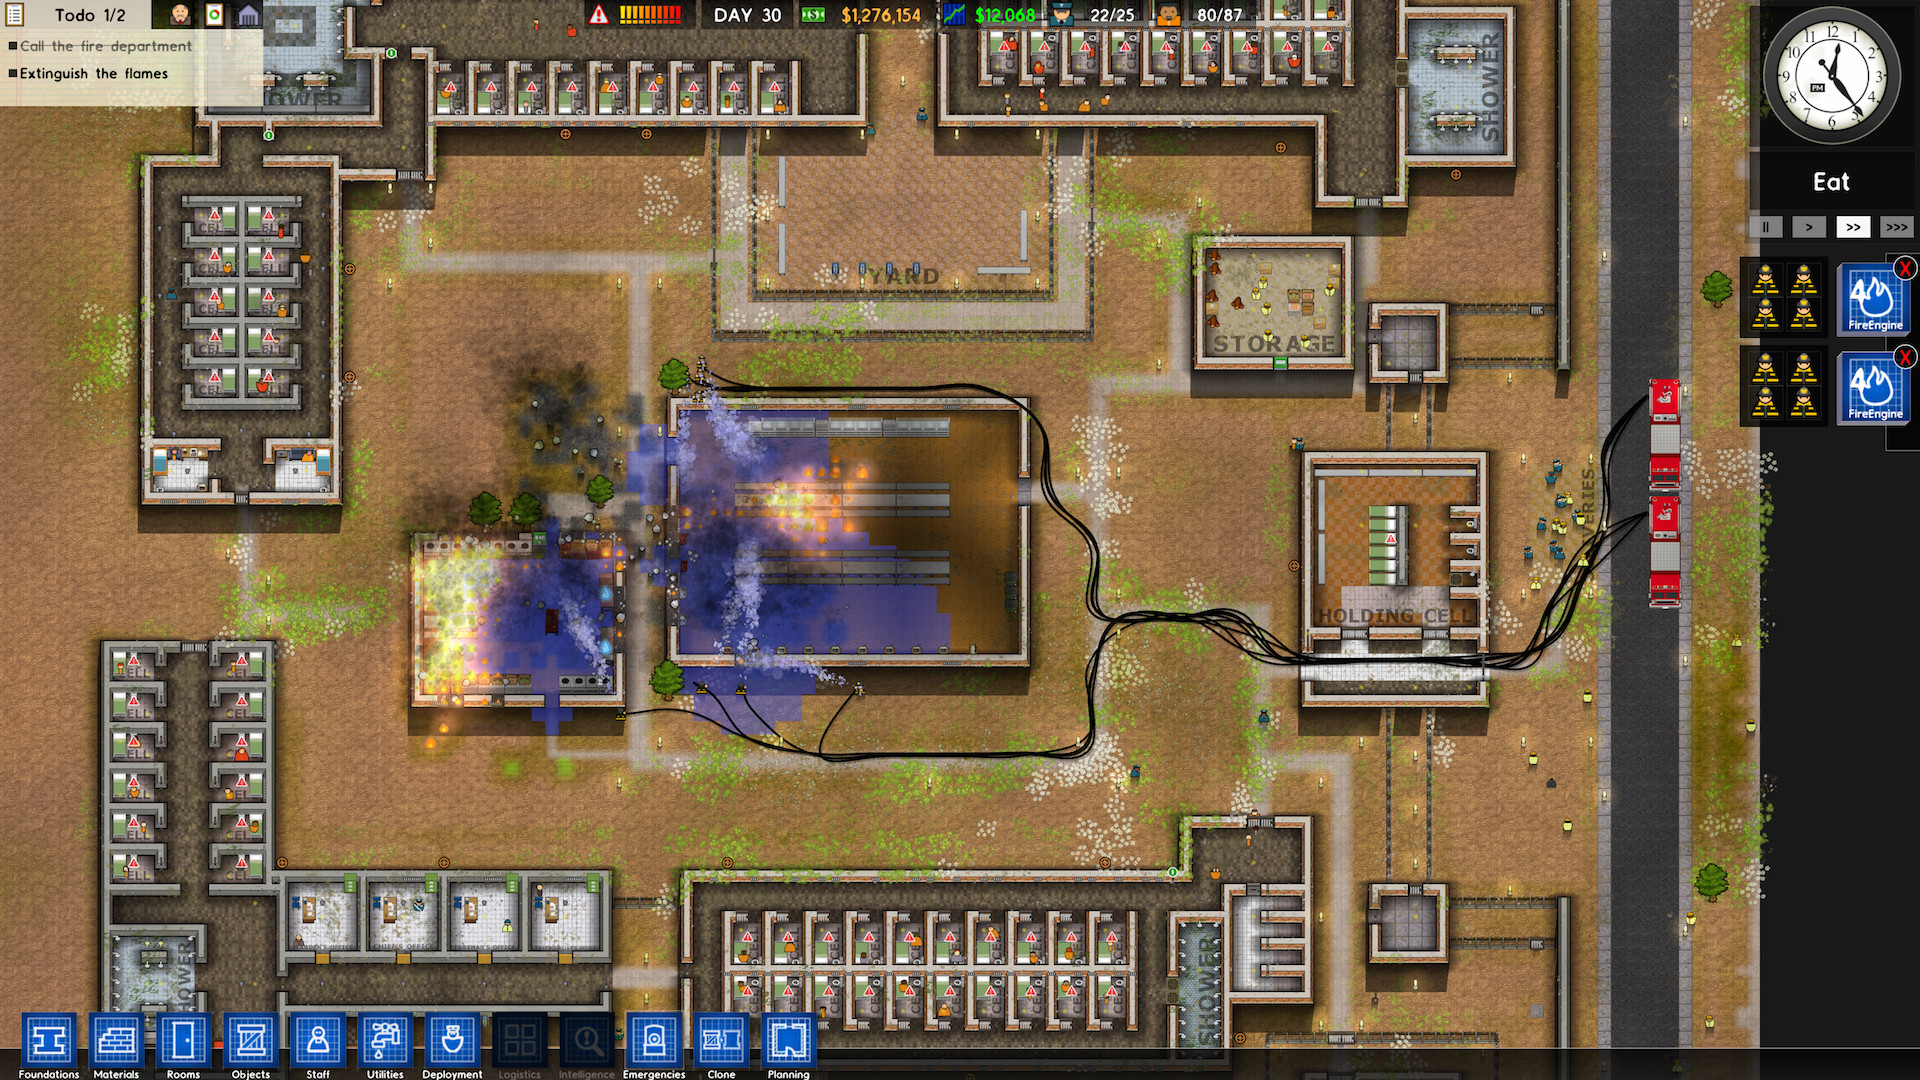 Prison Architect screenshot